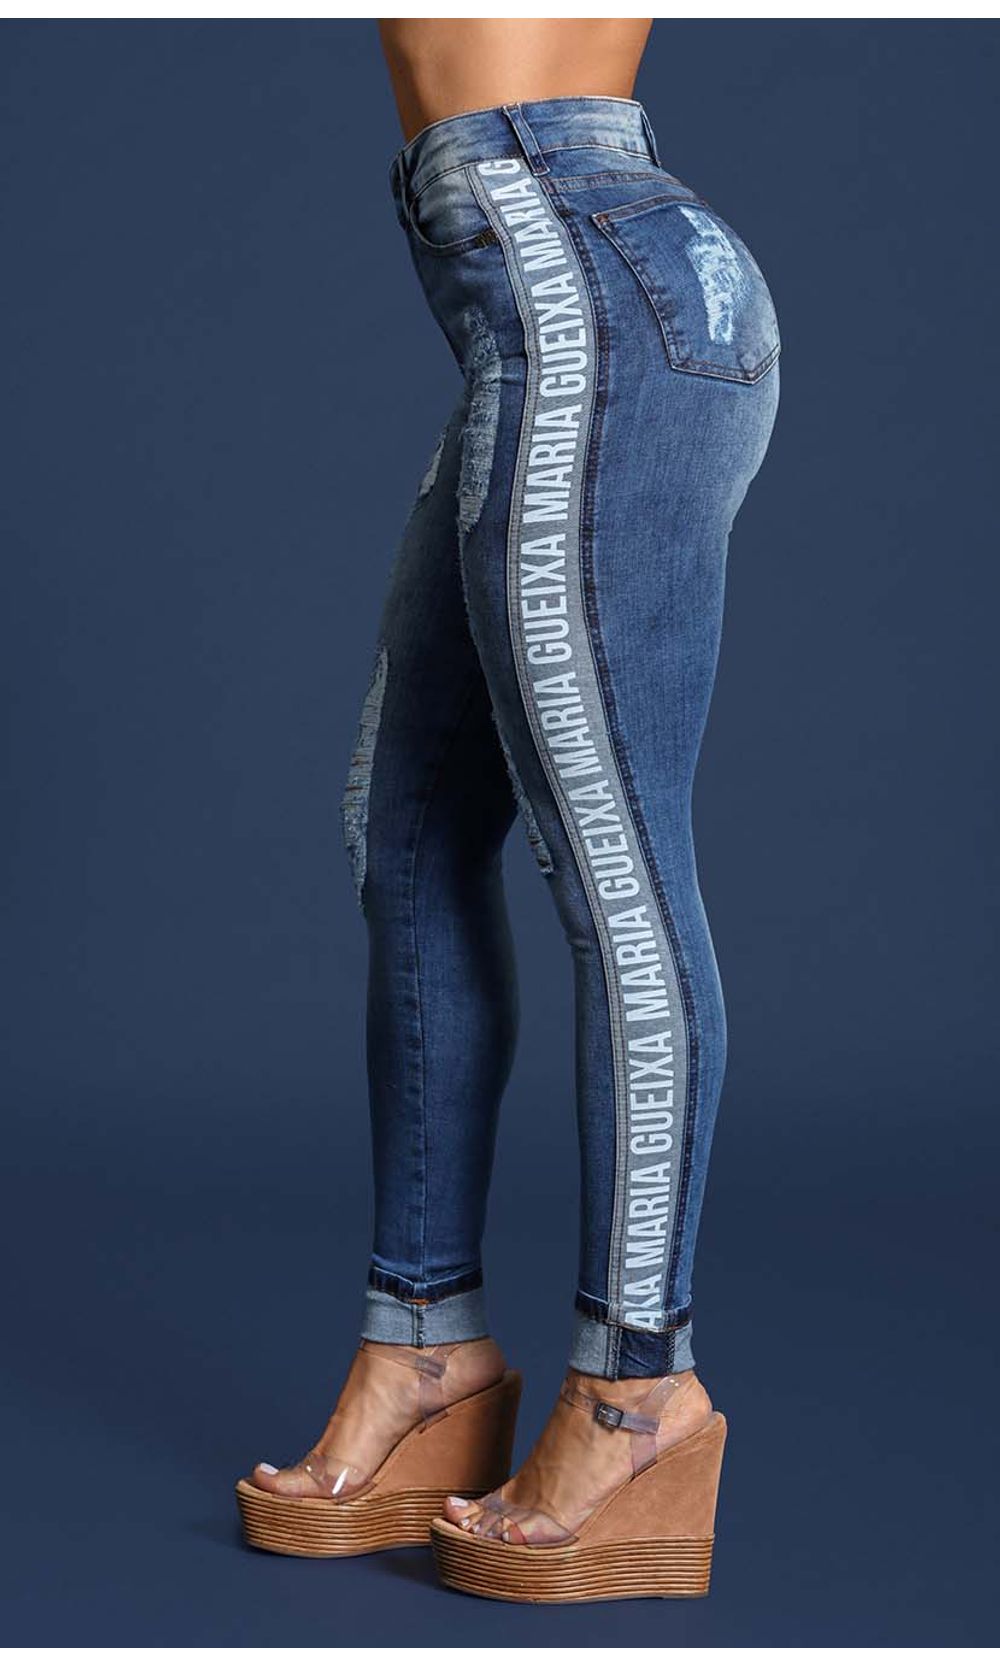 jeans maria gueixa